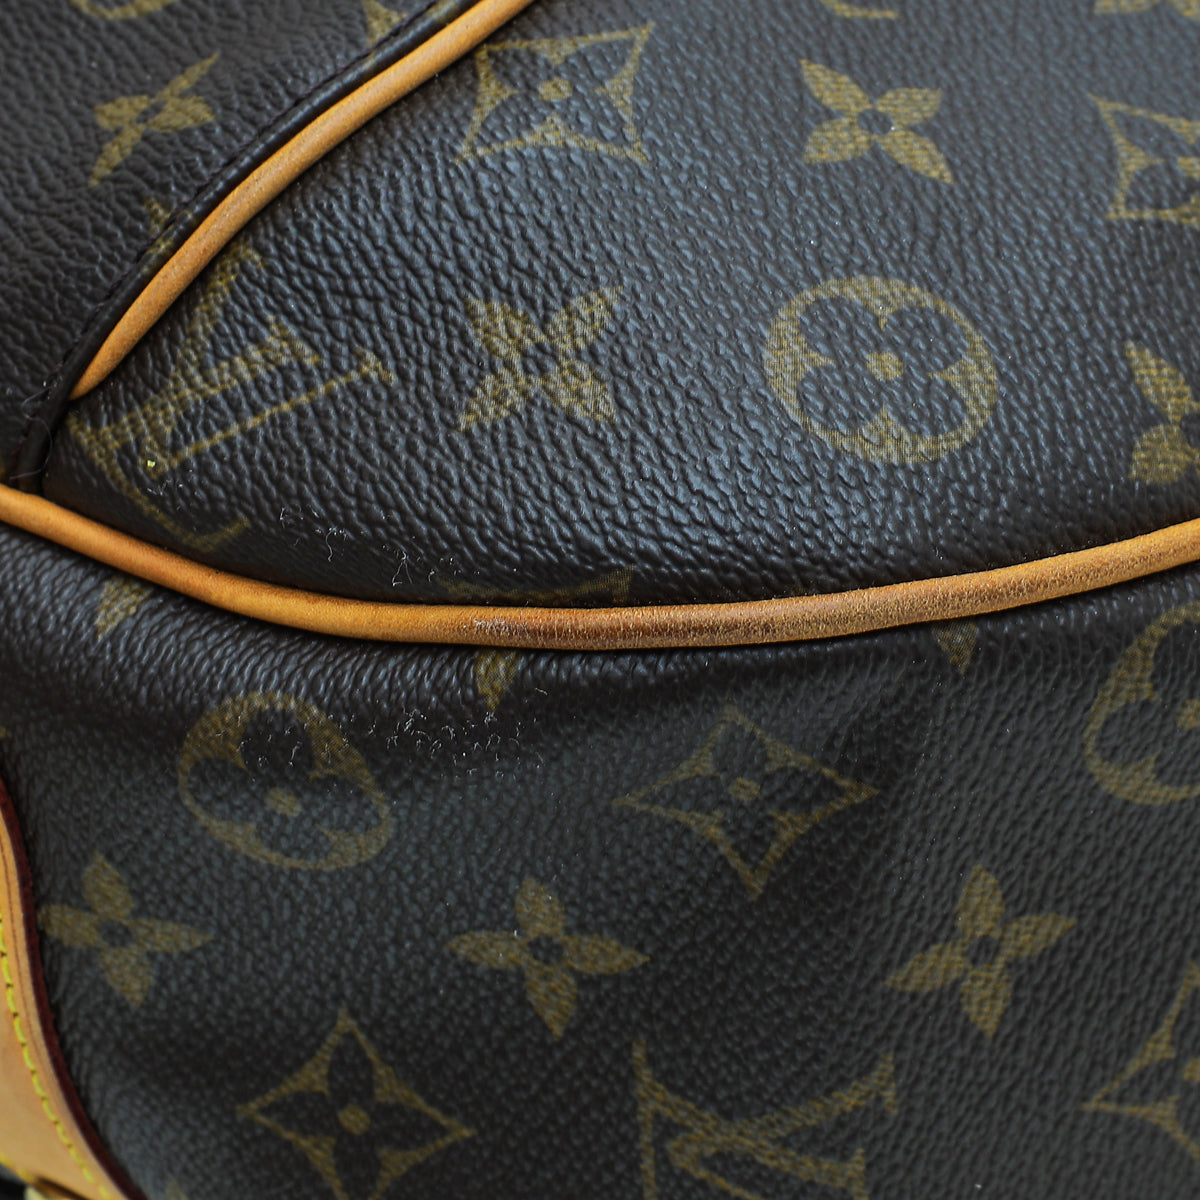 Louis Vuitton Monogram Galliera PM Bag